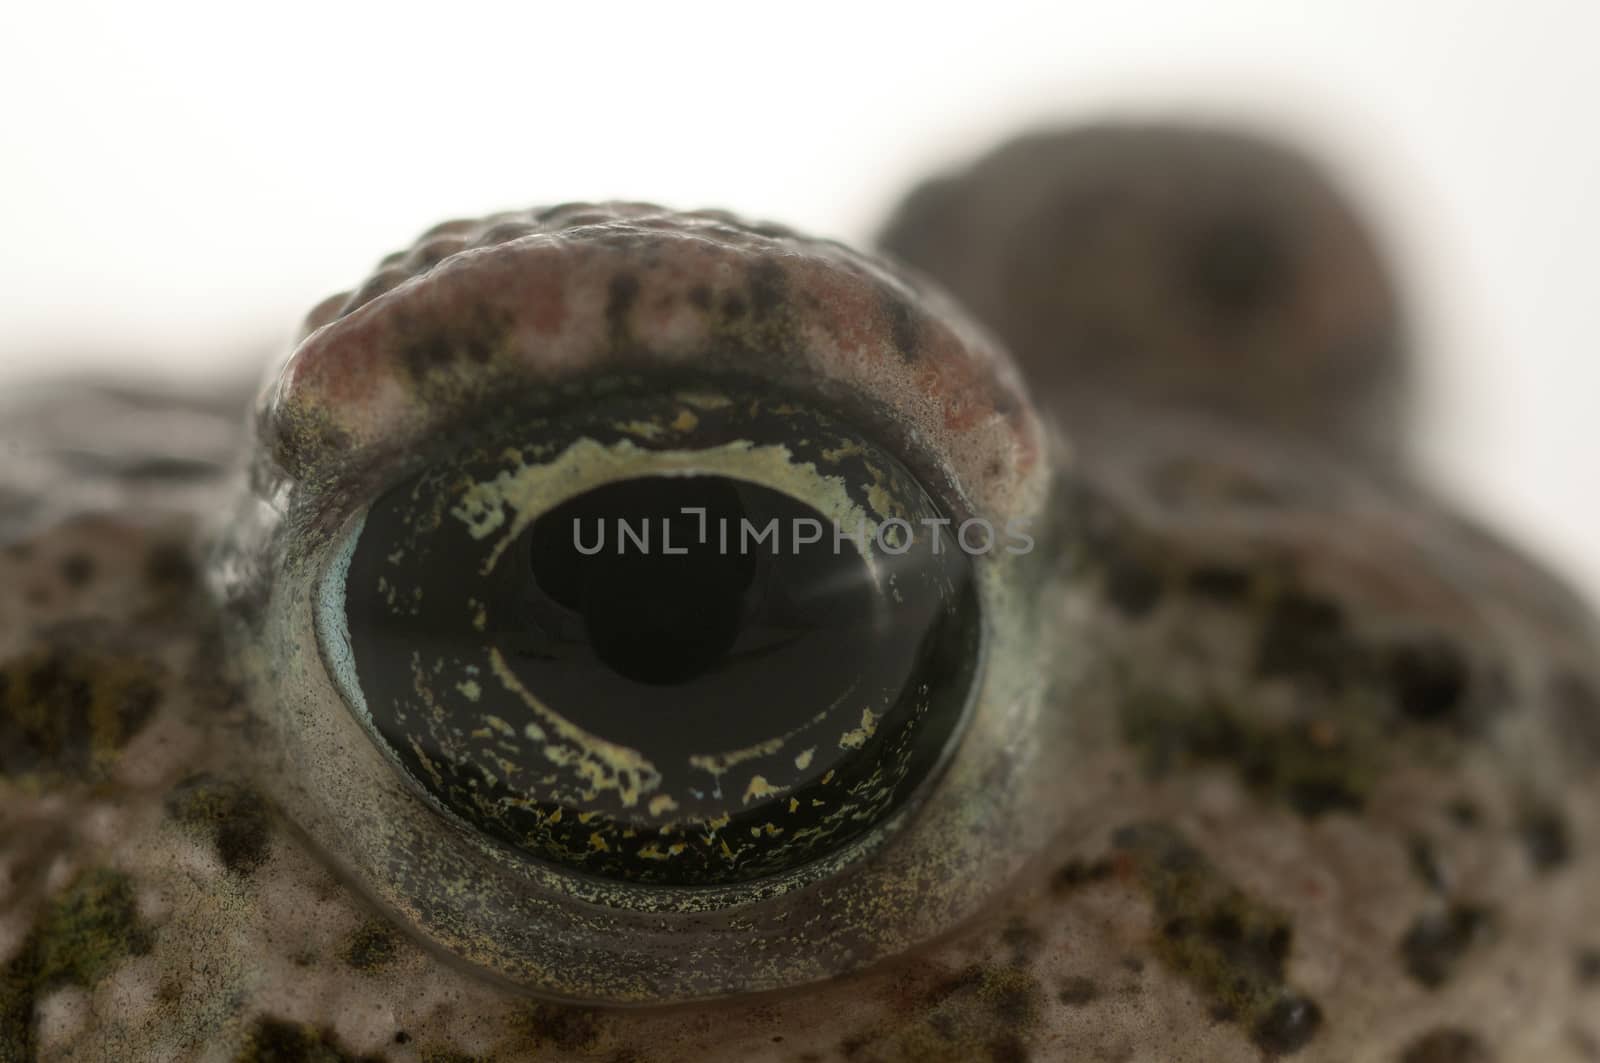 Natterjack toad (Epidalea calamita) with White background, Eye Detail